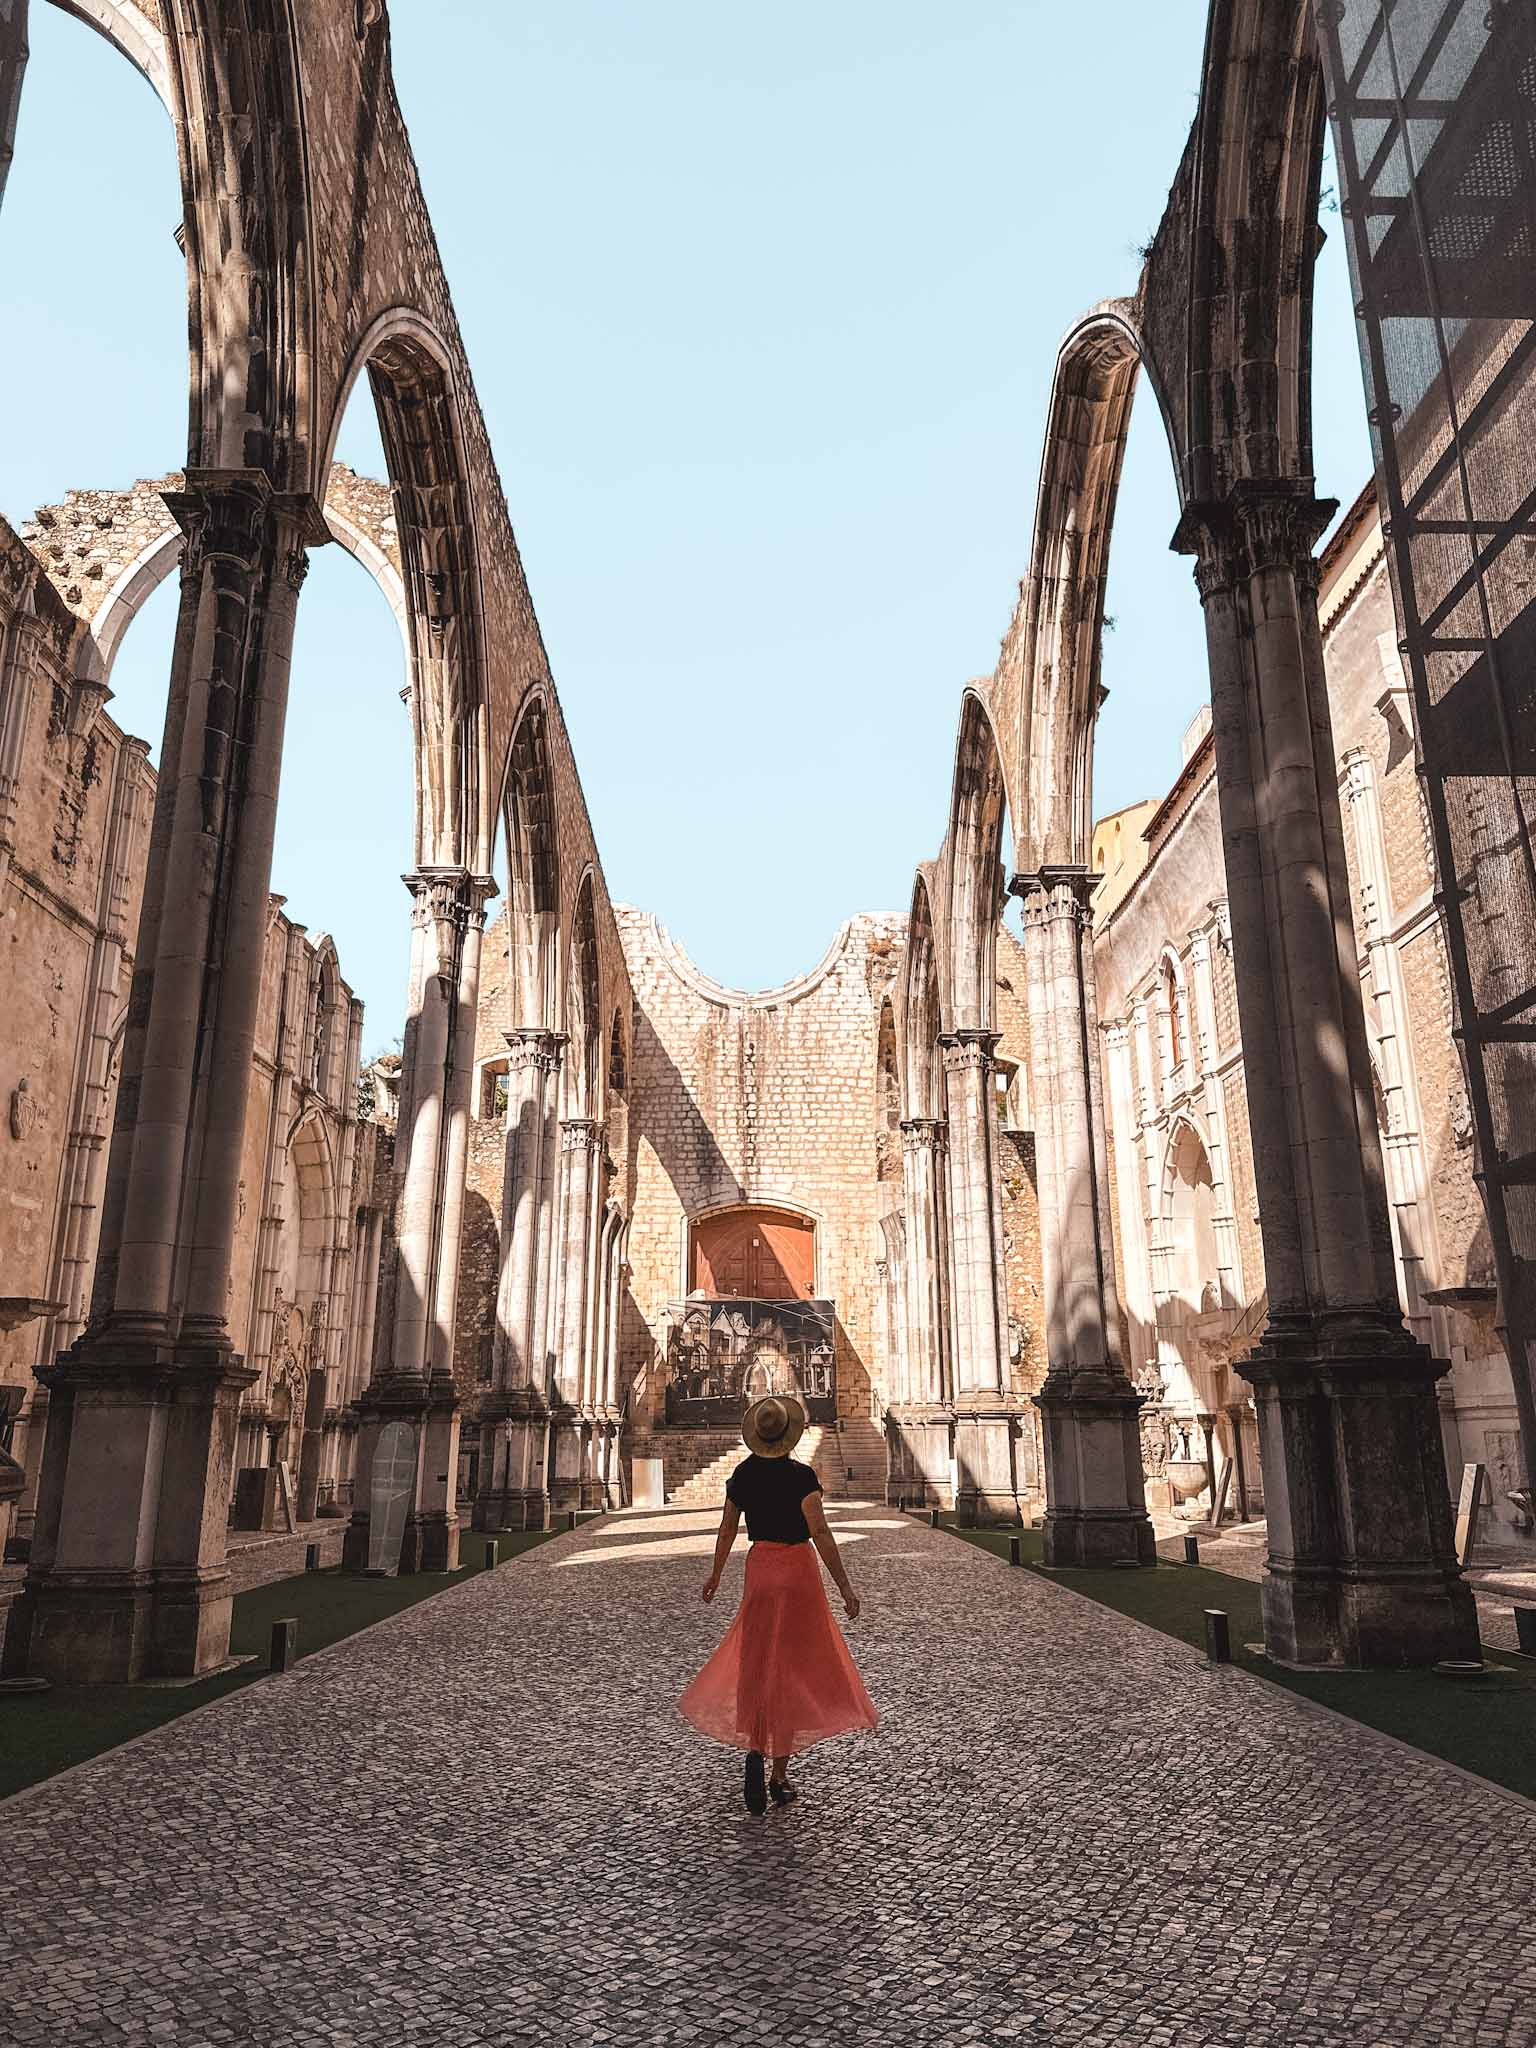 Best Instagram photo spots in Lisbon - Carmo Convent